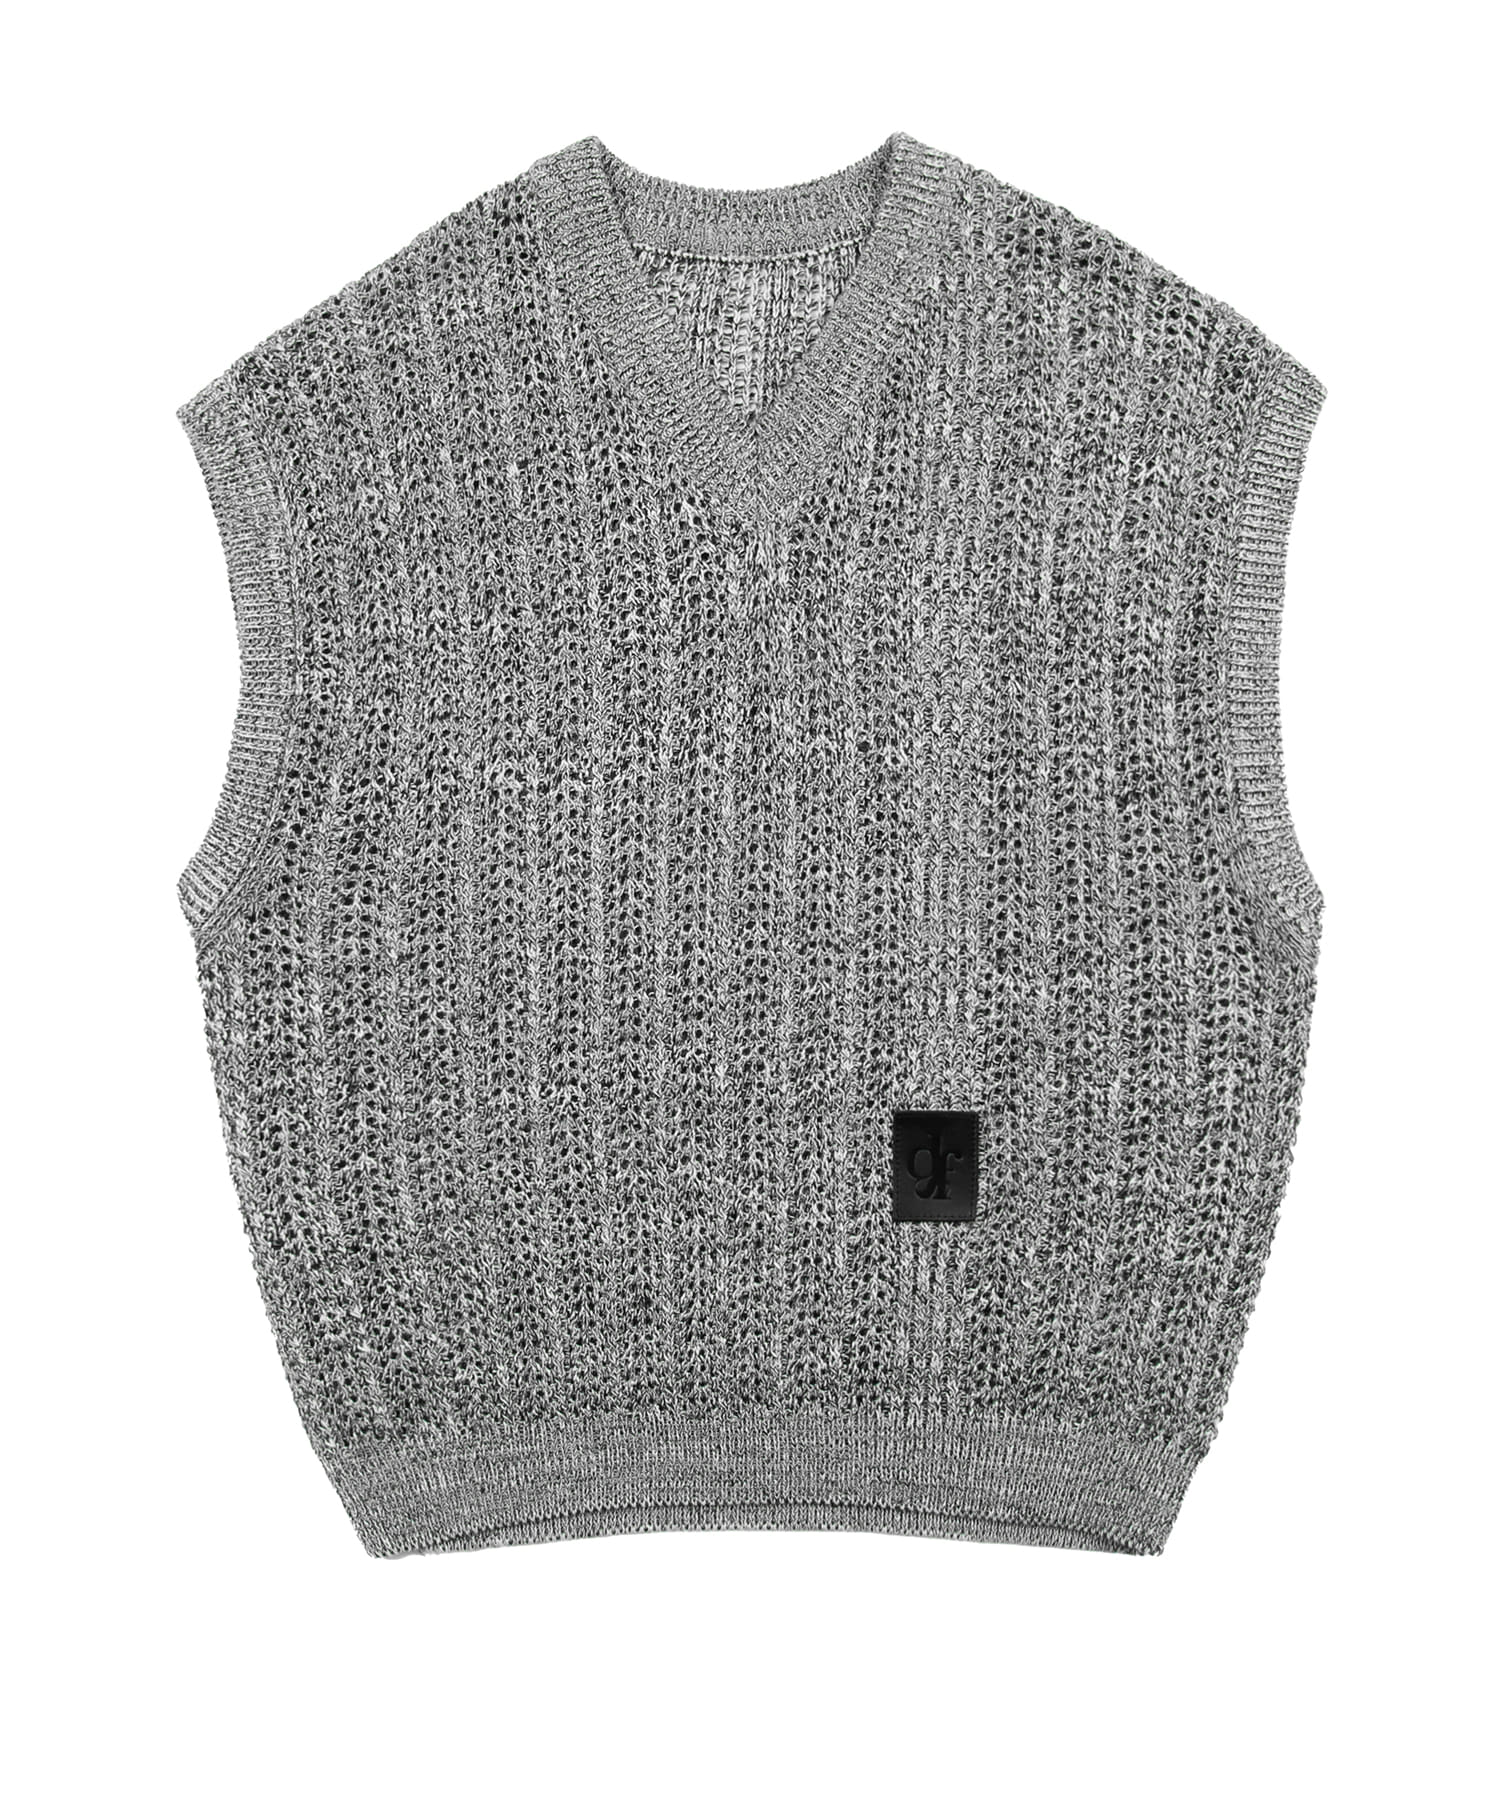 See-through fisherman knit vest GREY